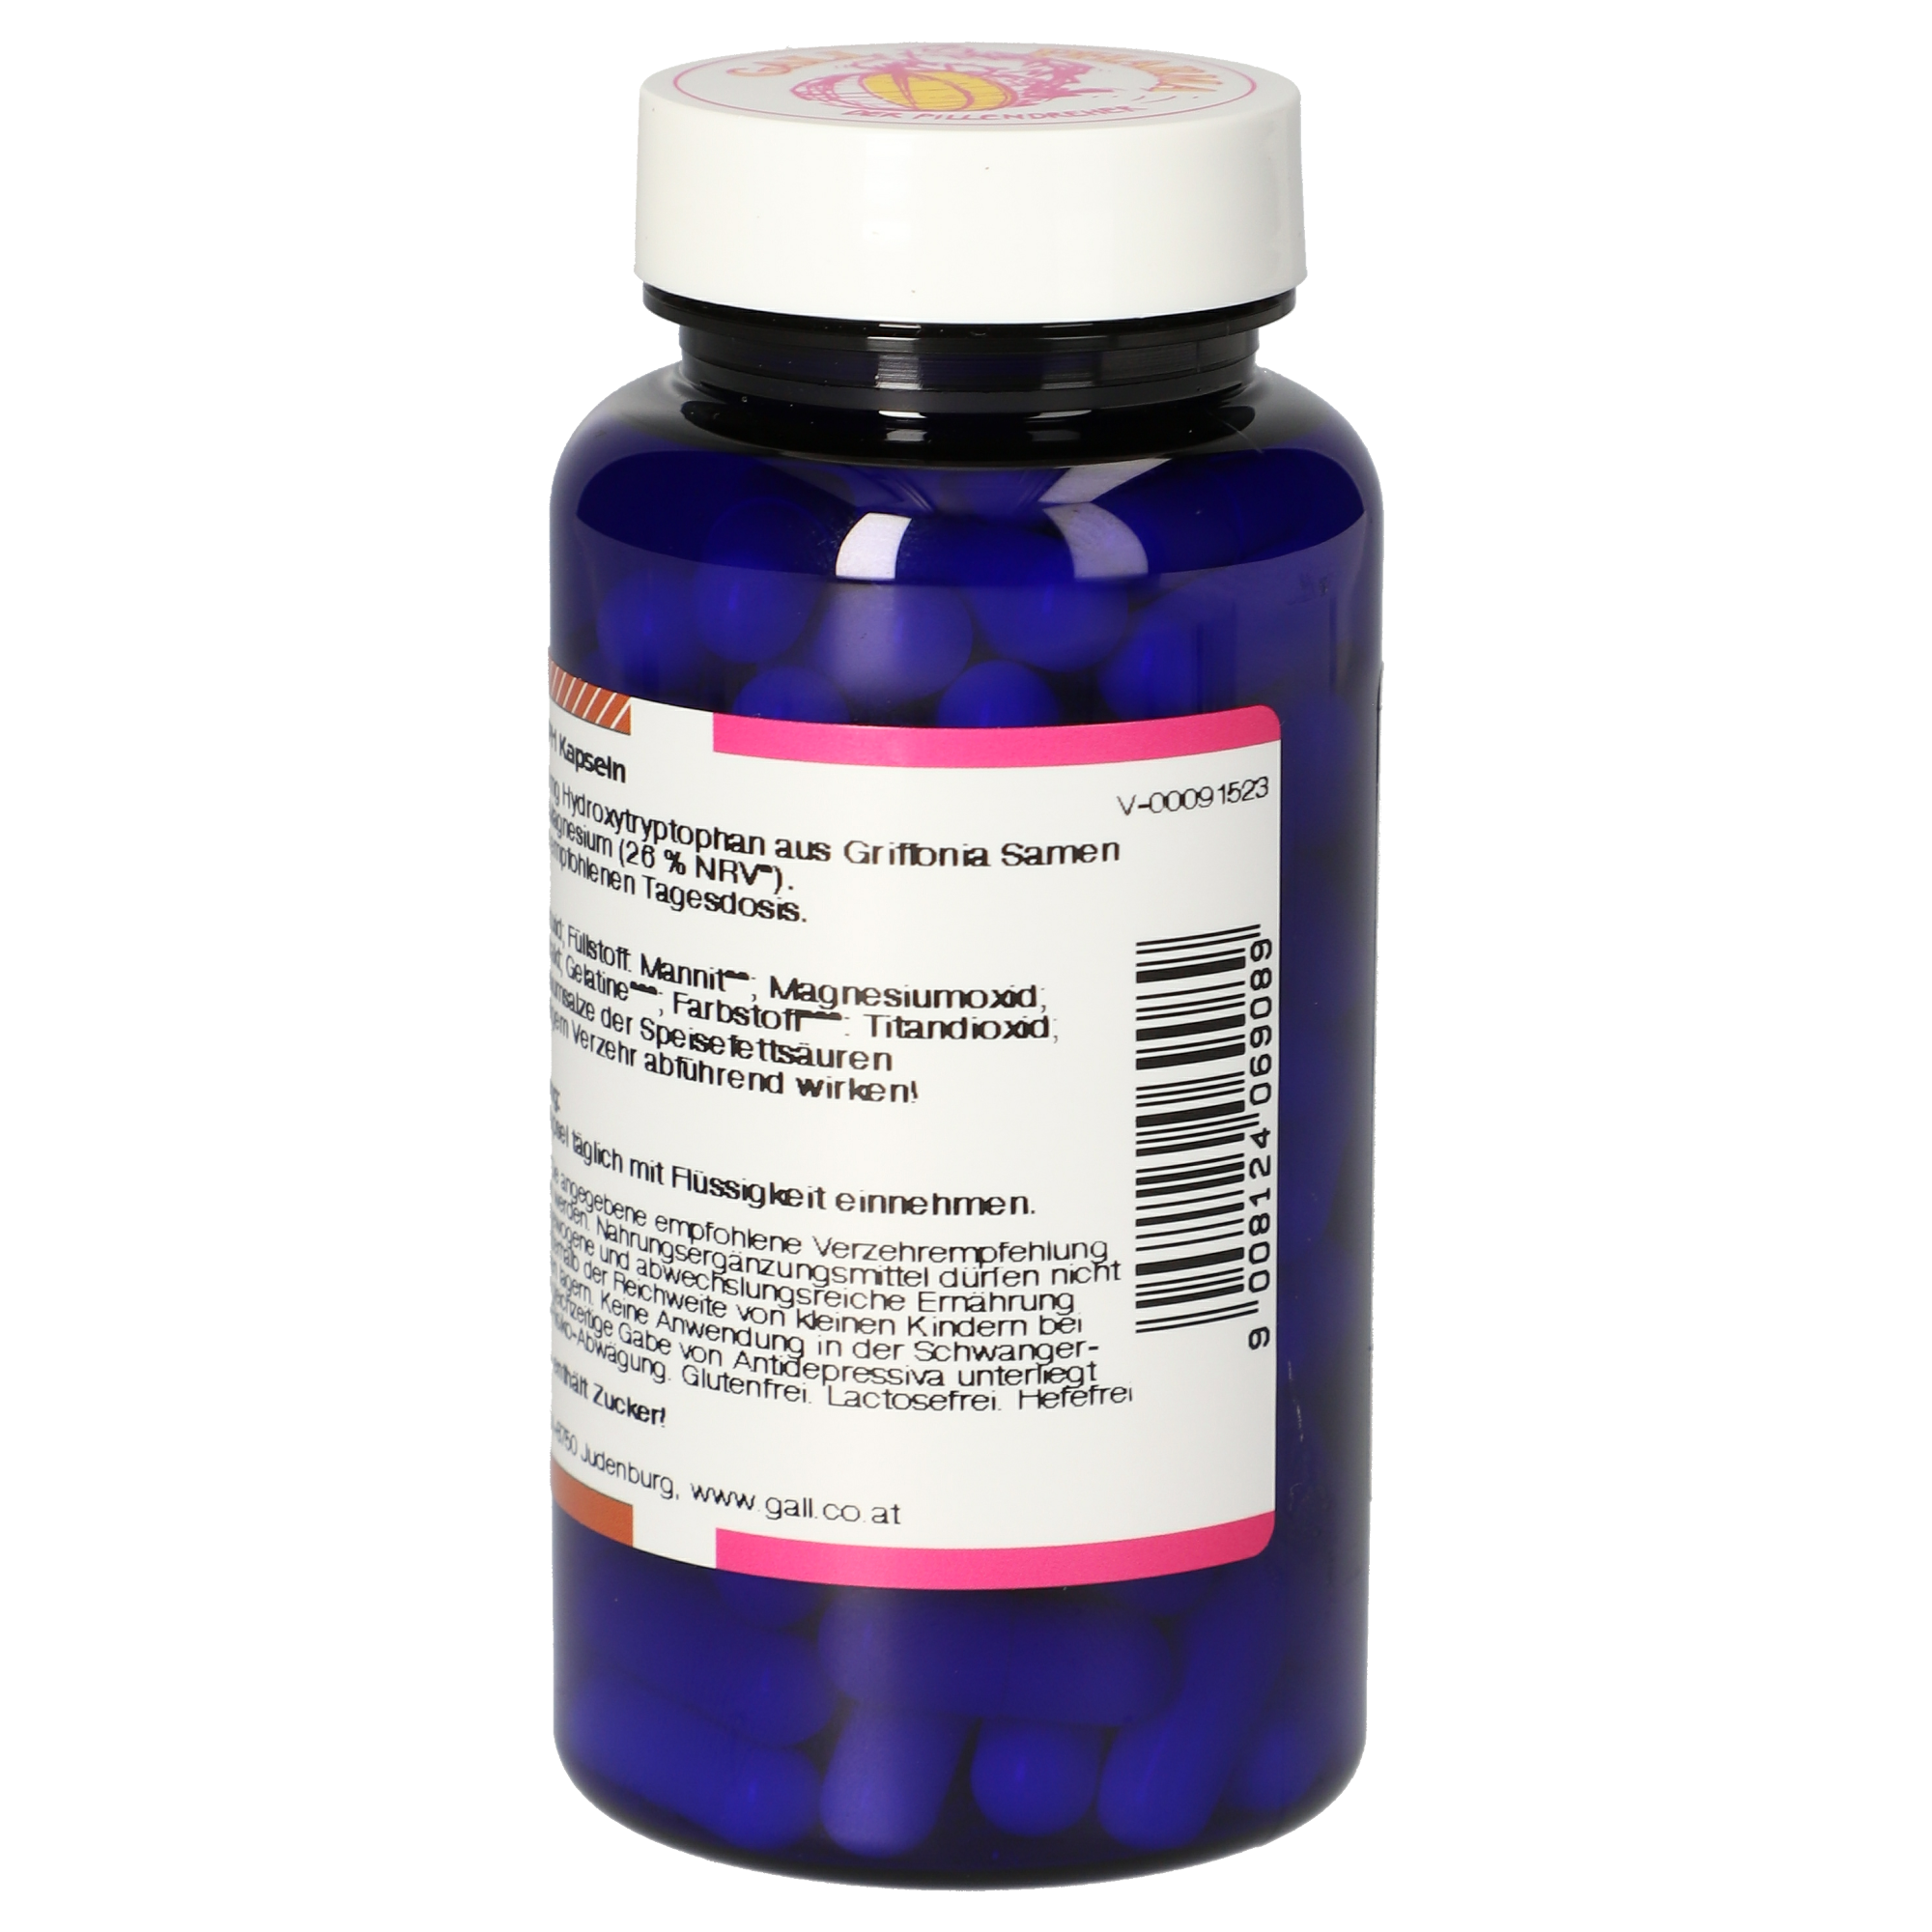 5-HTP 100 mg GPH Kapseln